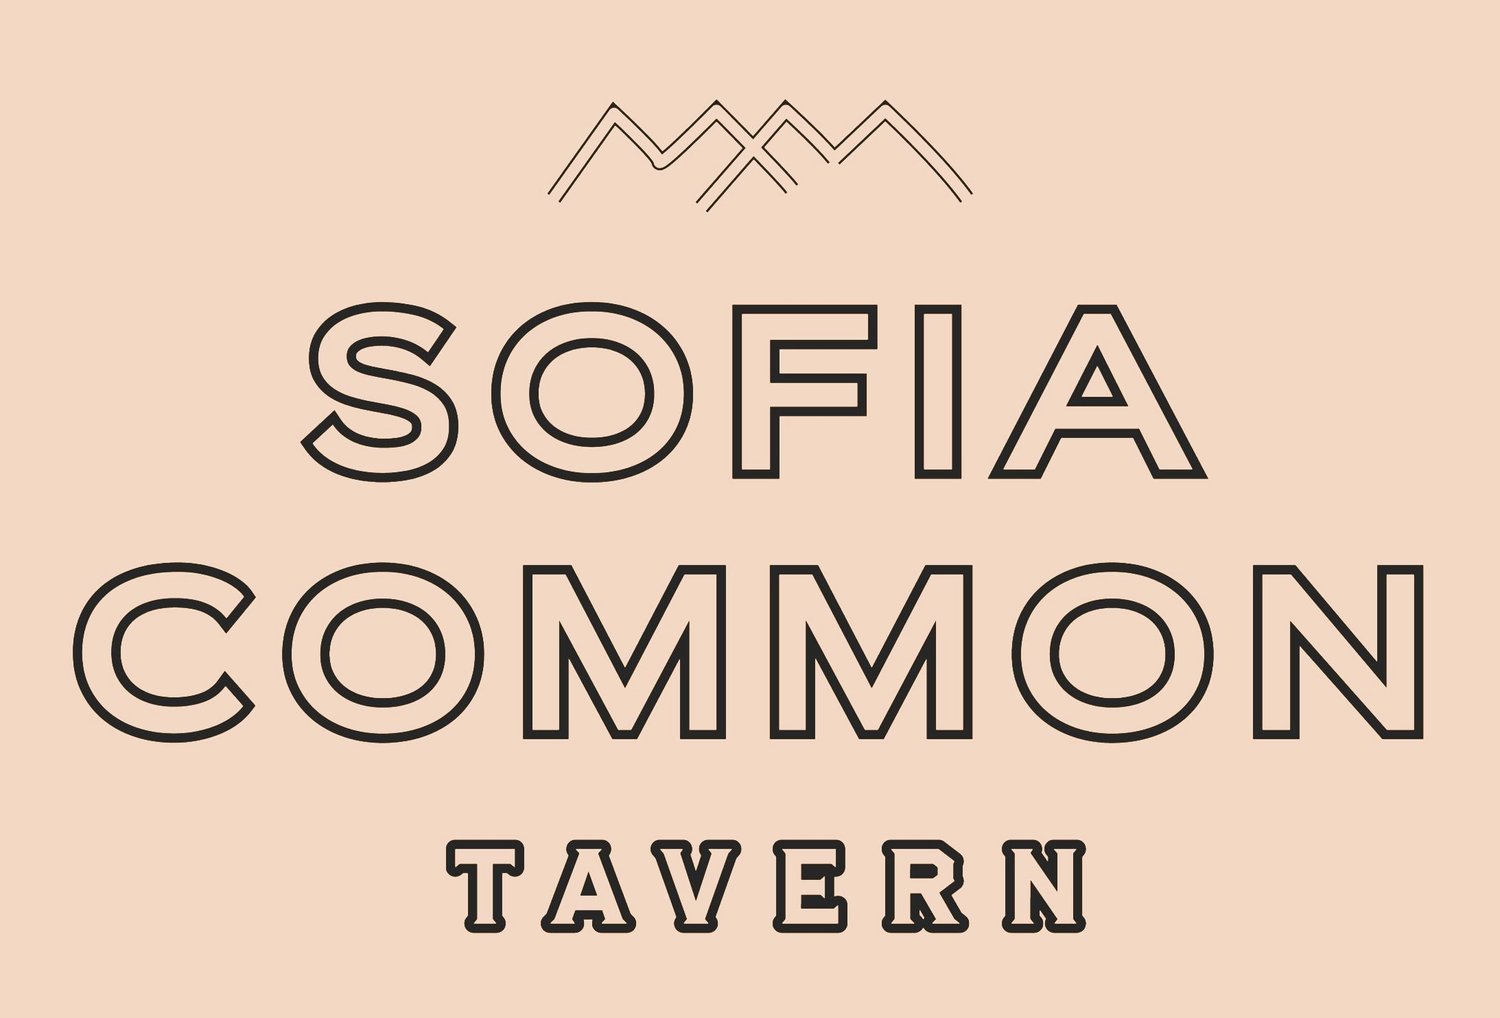 Sofia Common